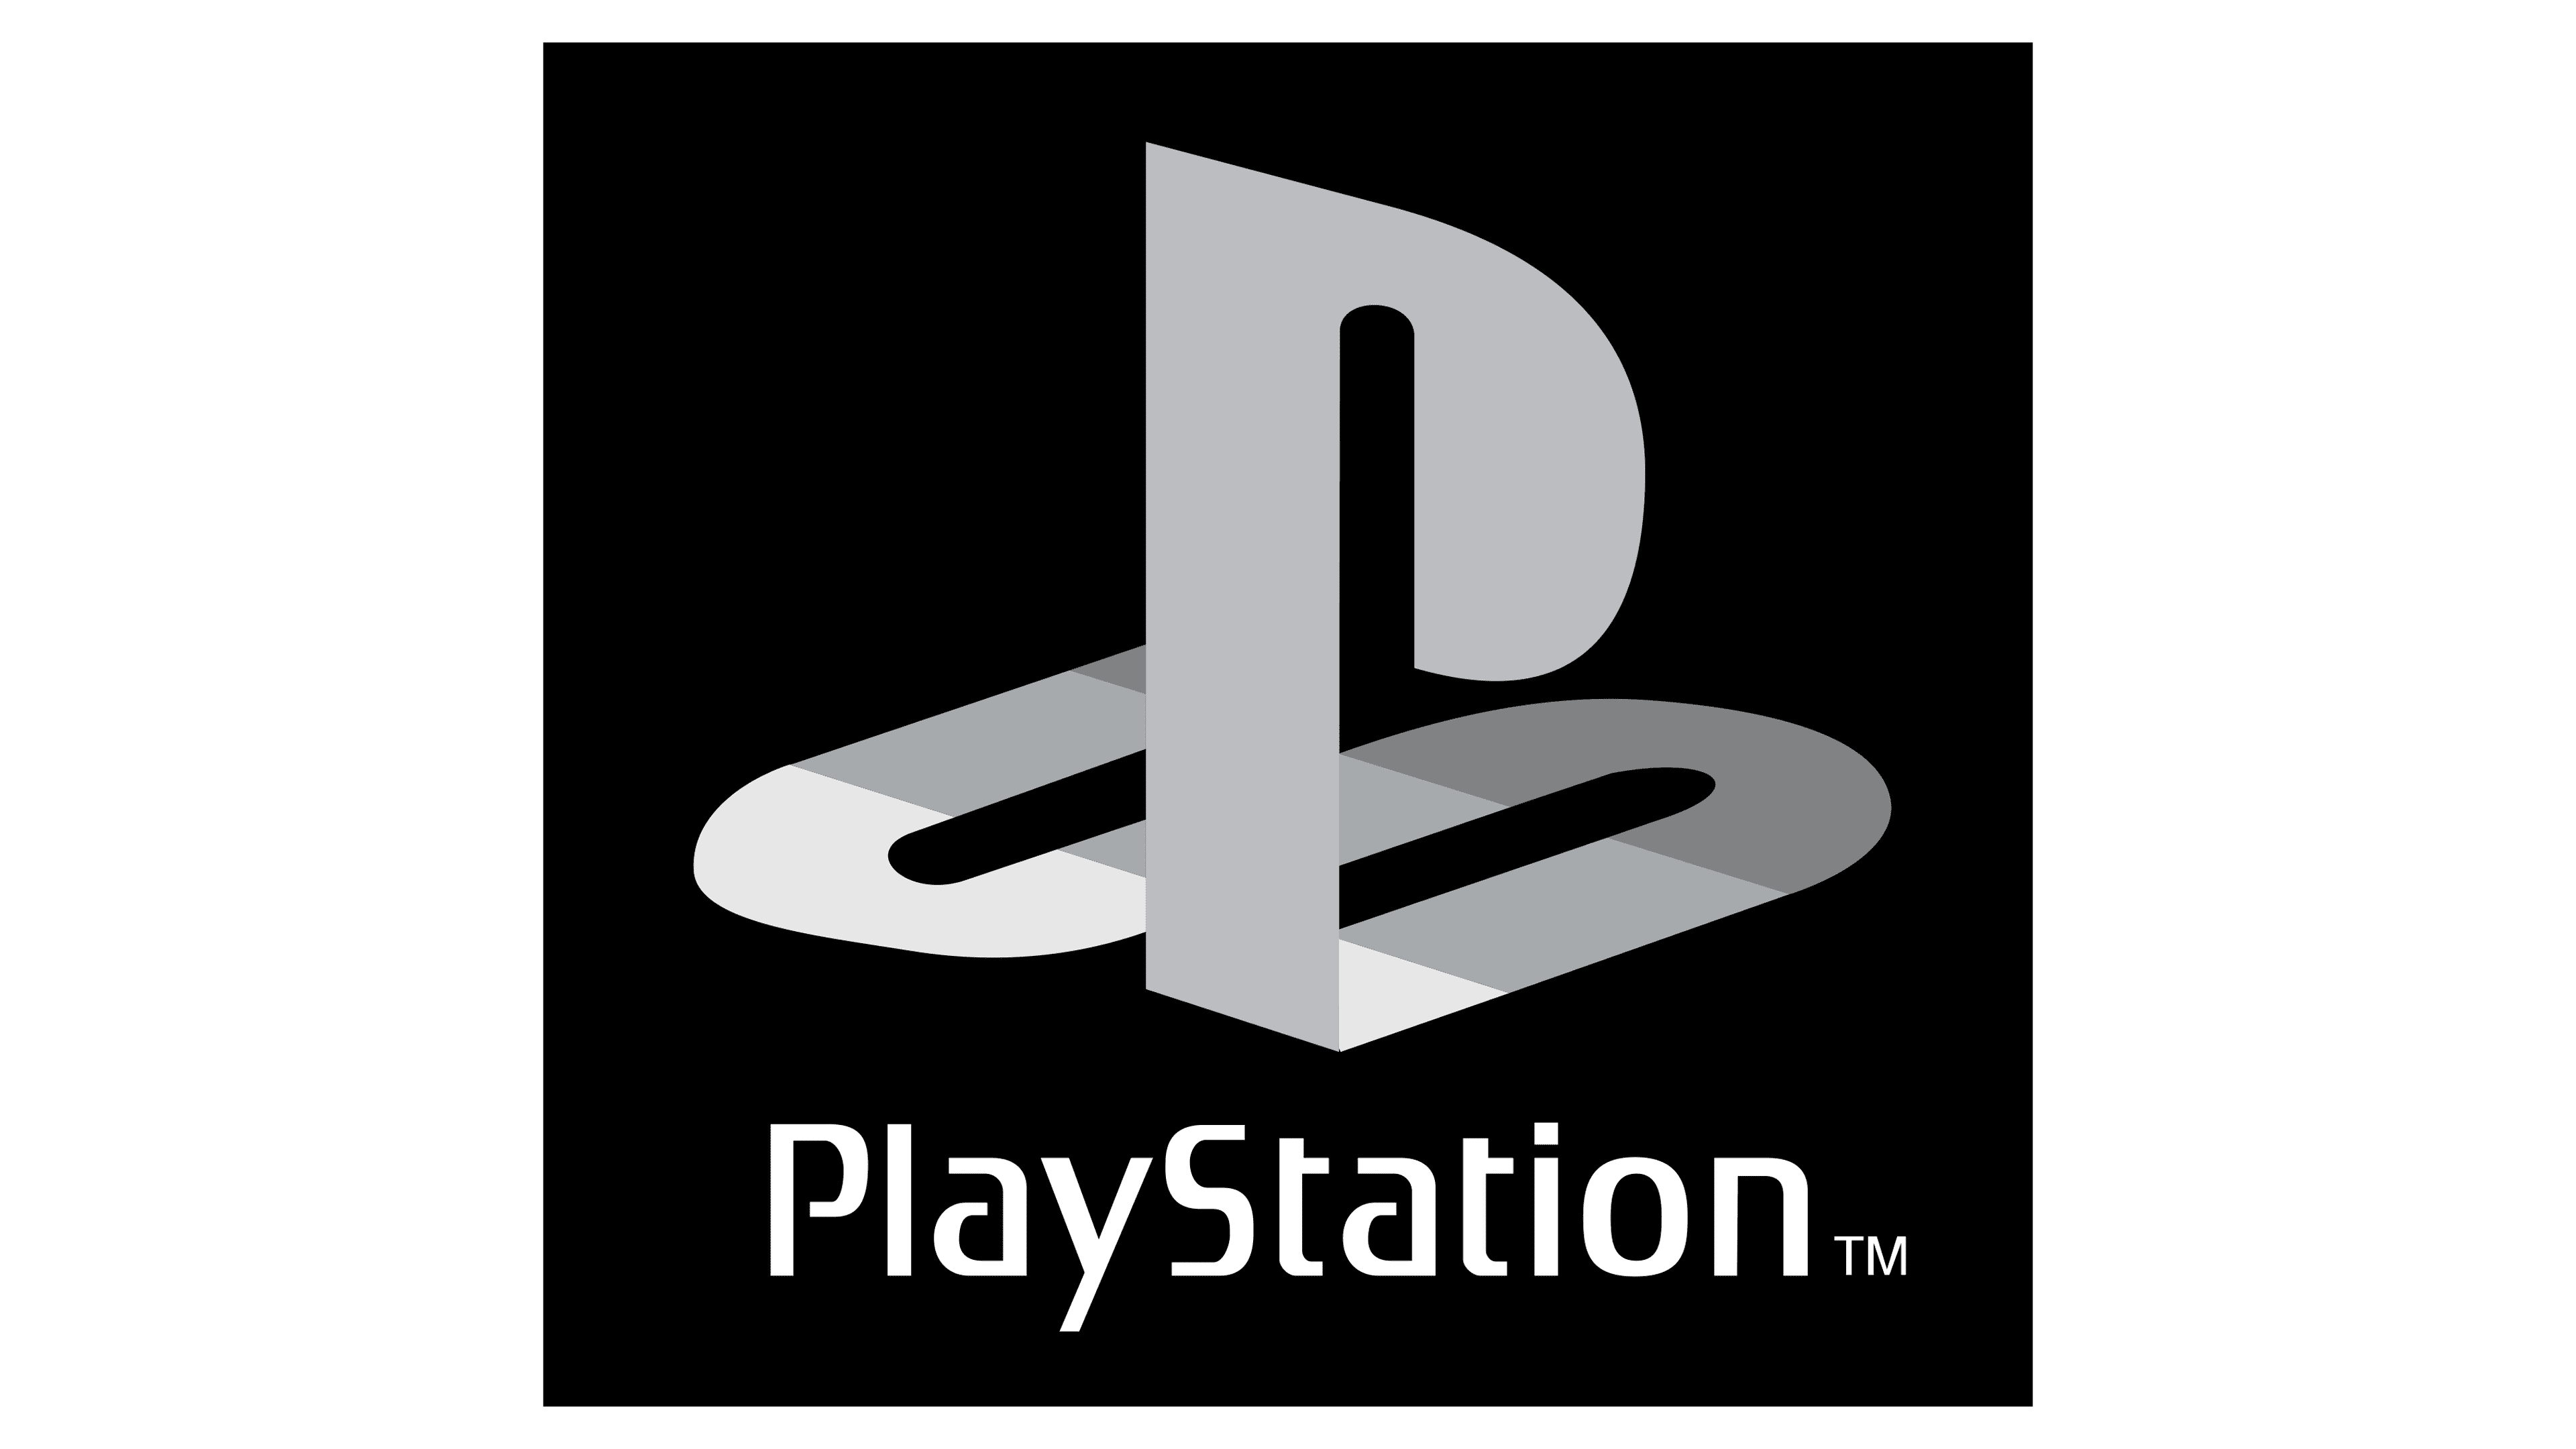 Логотип Sony PLAYSTATION 1. Sony PLAYSTATION 4 logo. Надпись плейстейшен. Sony PLAYSTATION надпись. Логотип пс